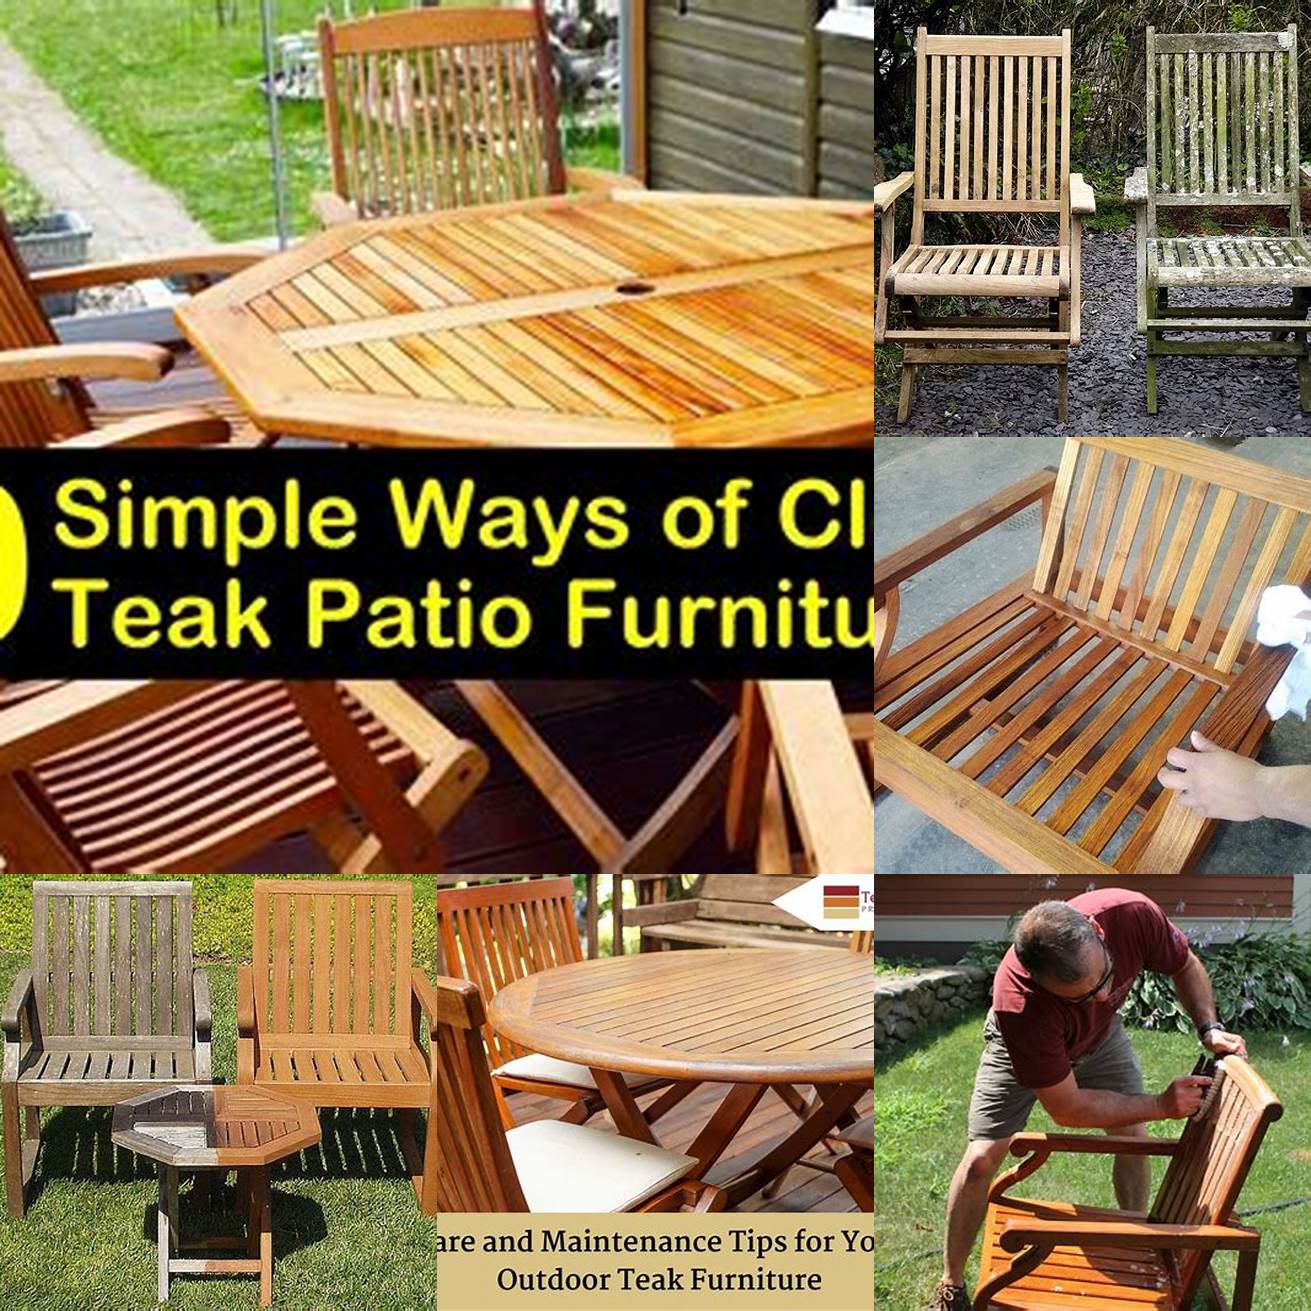 Teak Outdoor Furniture Maintenance